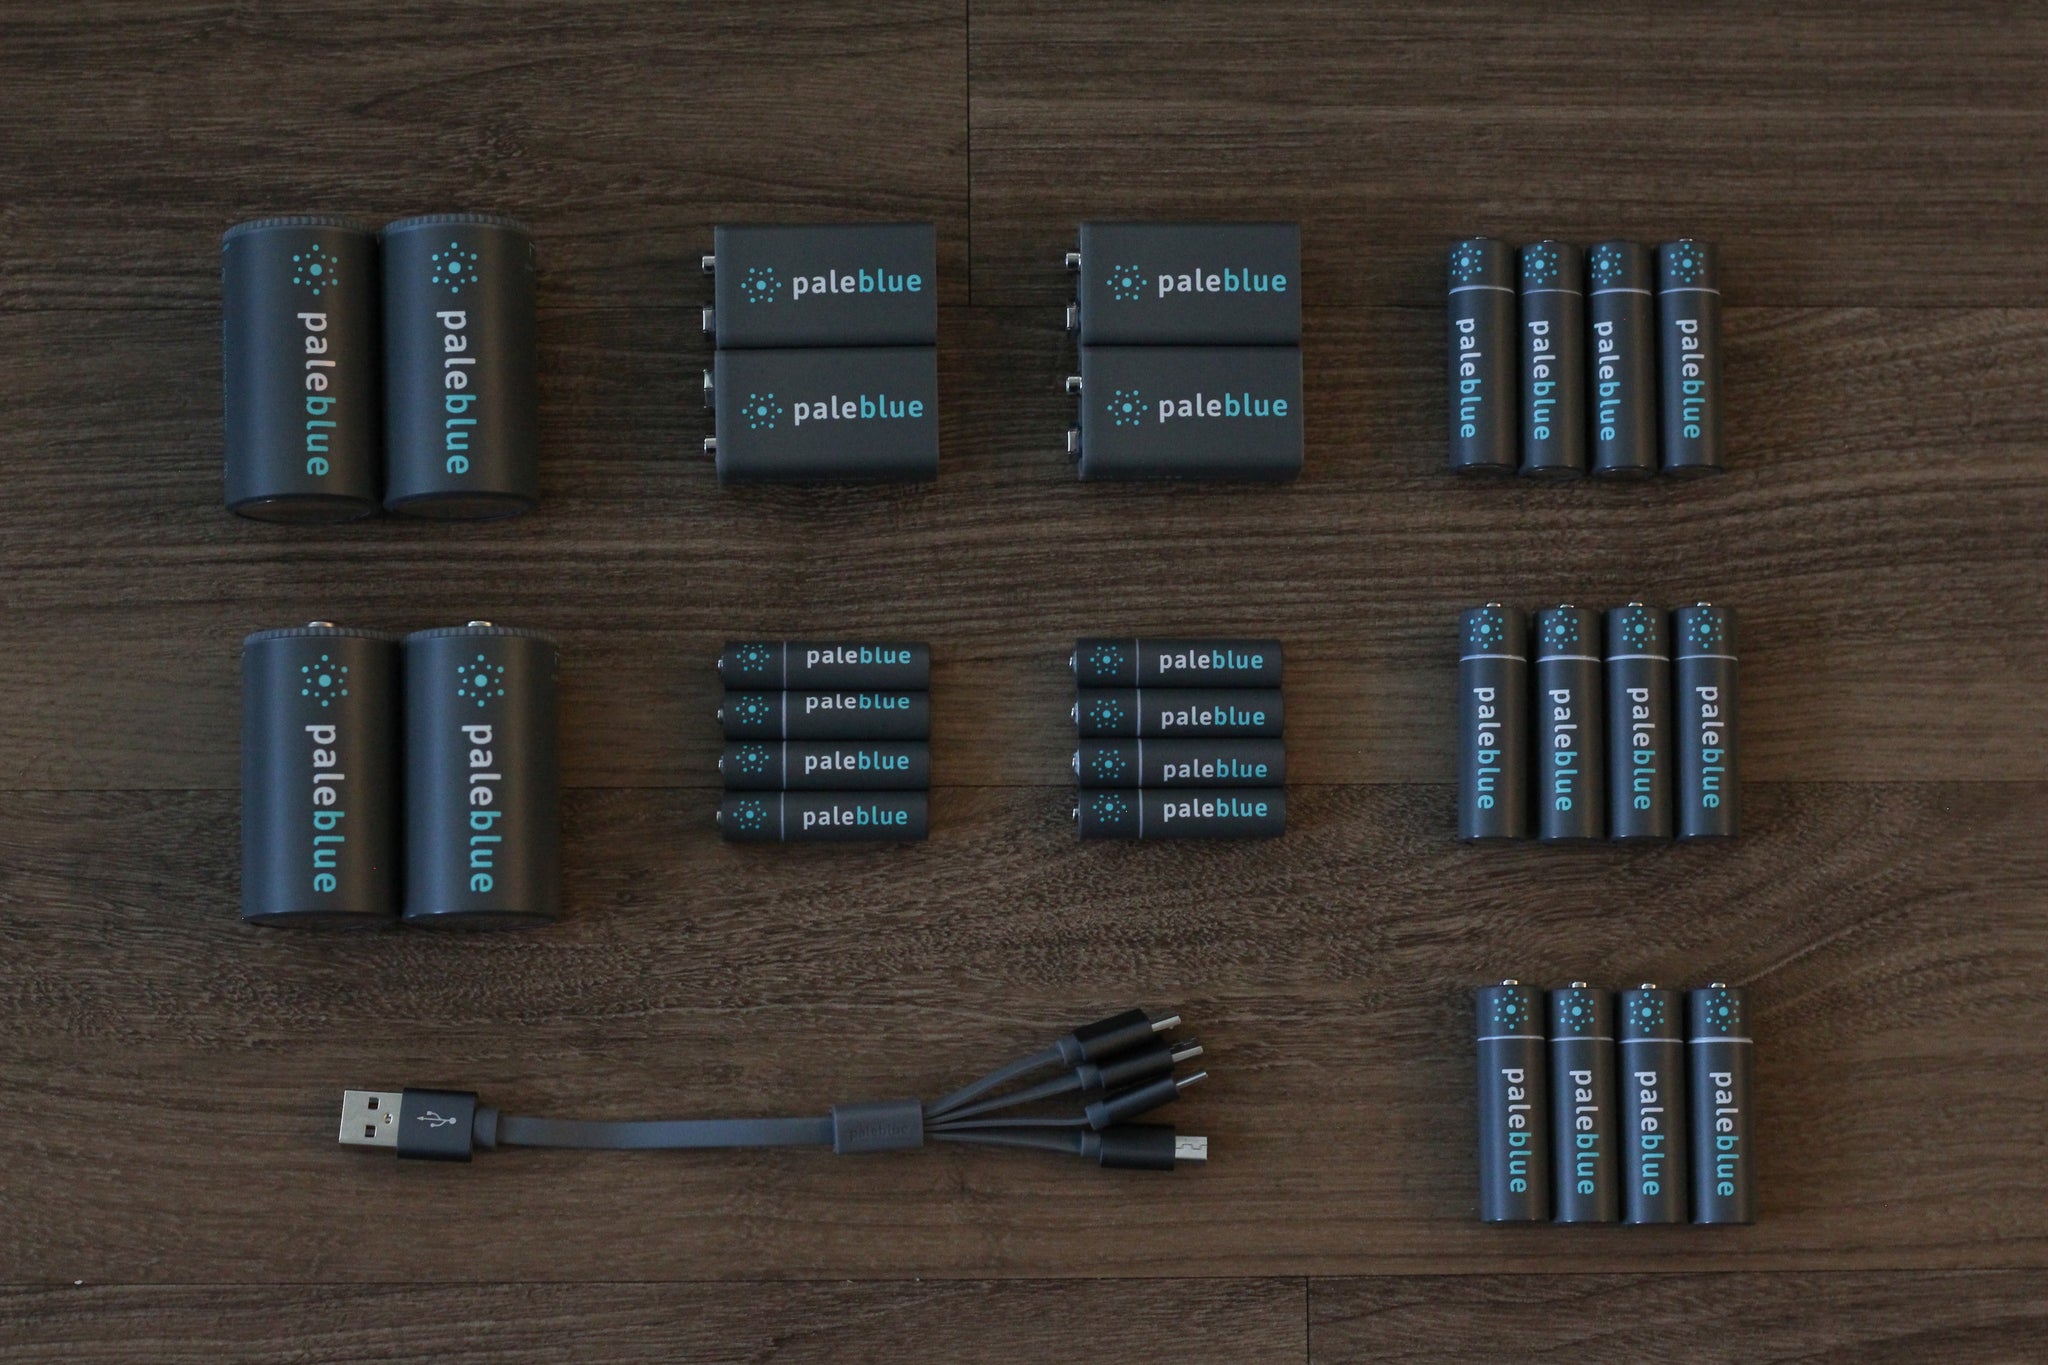 paleblue's battery line up